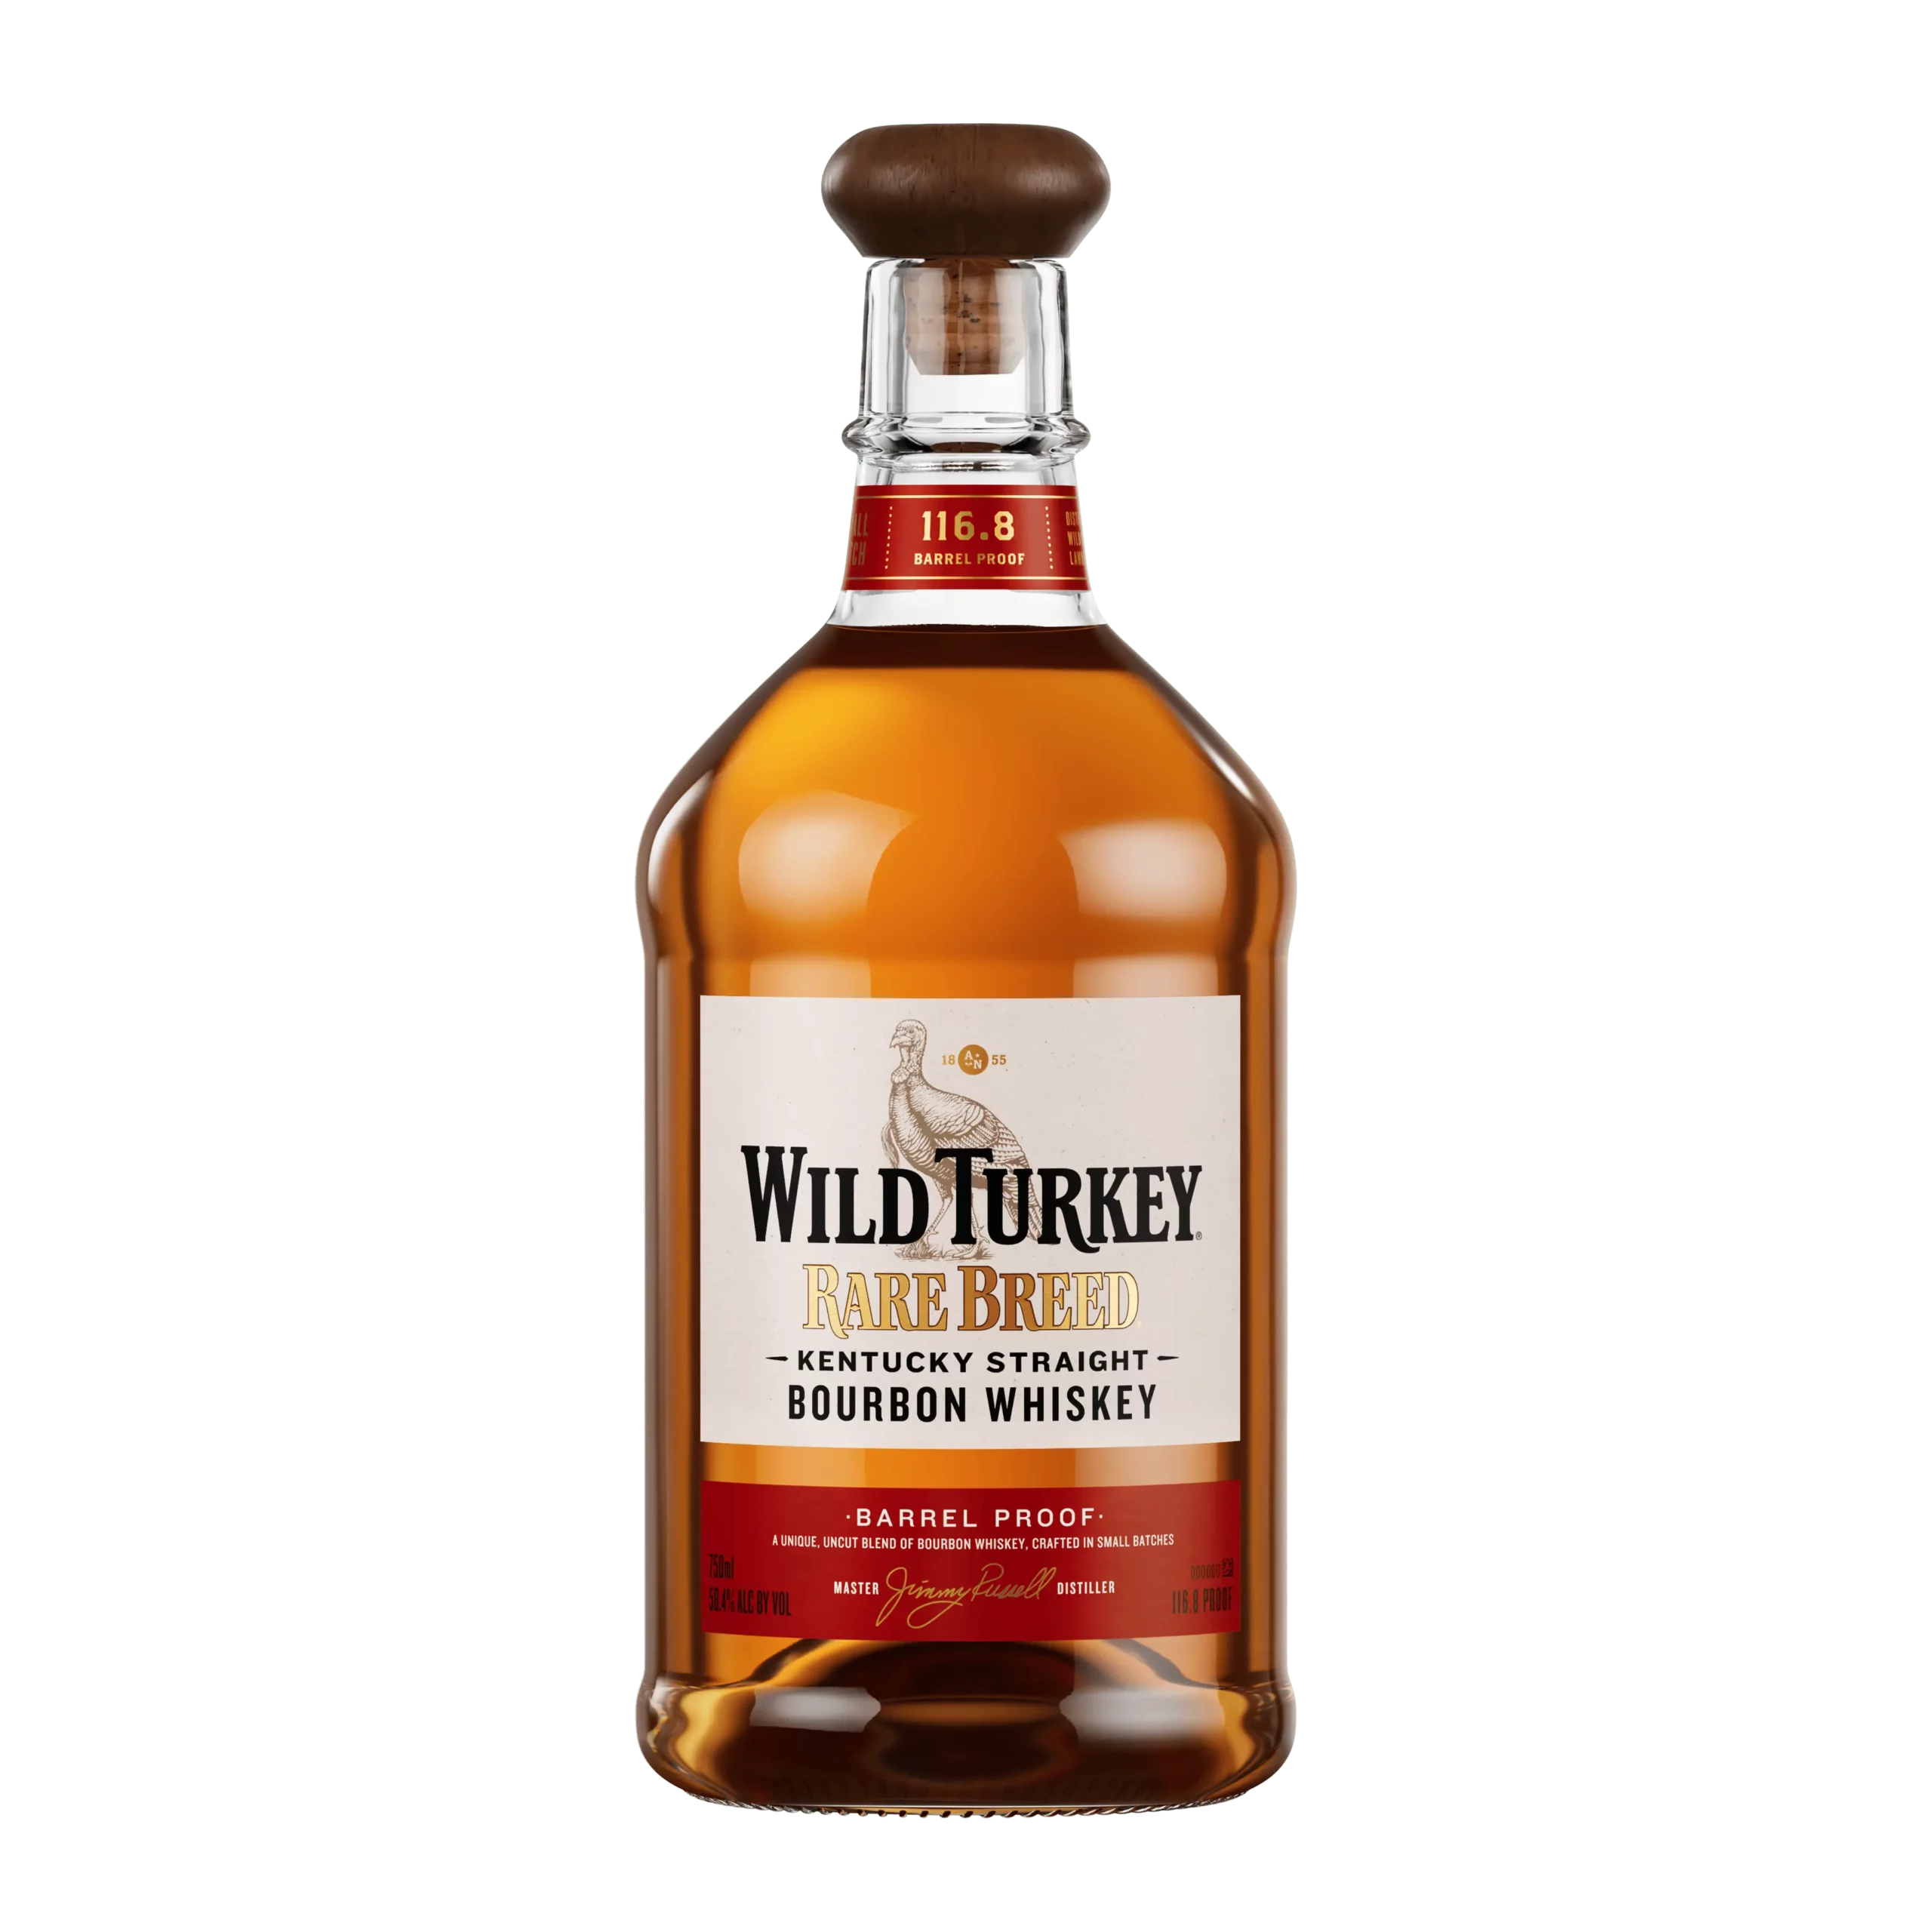 WILD TURKEY RARE BREED